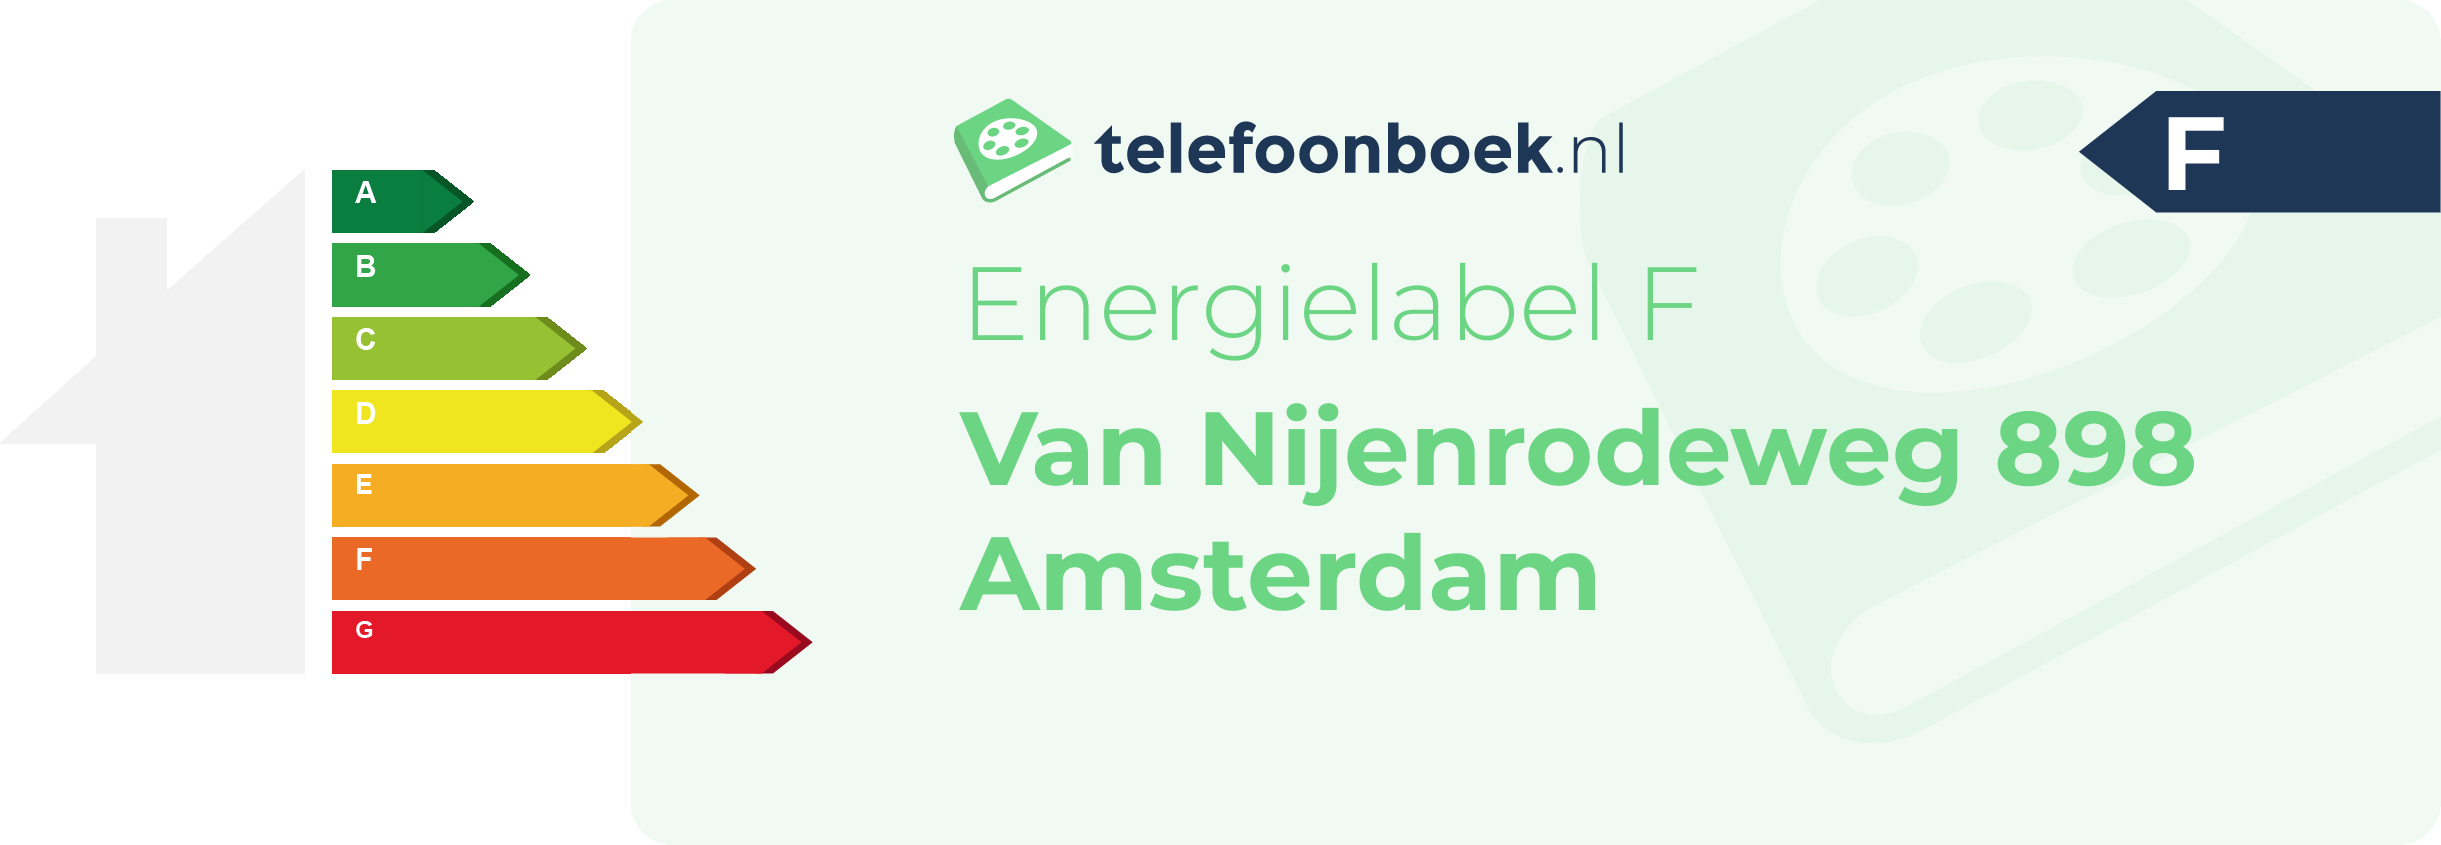 Energielabel Van Nijenrodeweg 898 Amsterdam